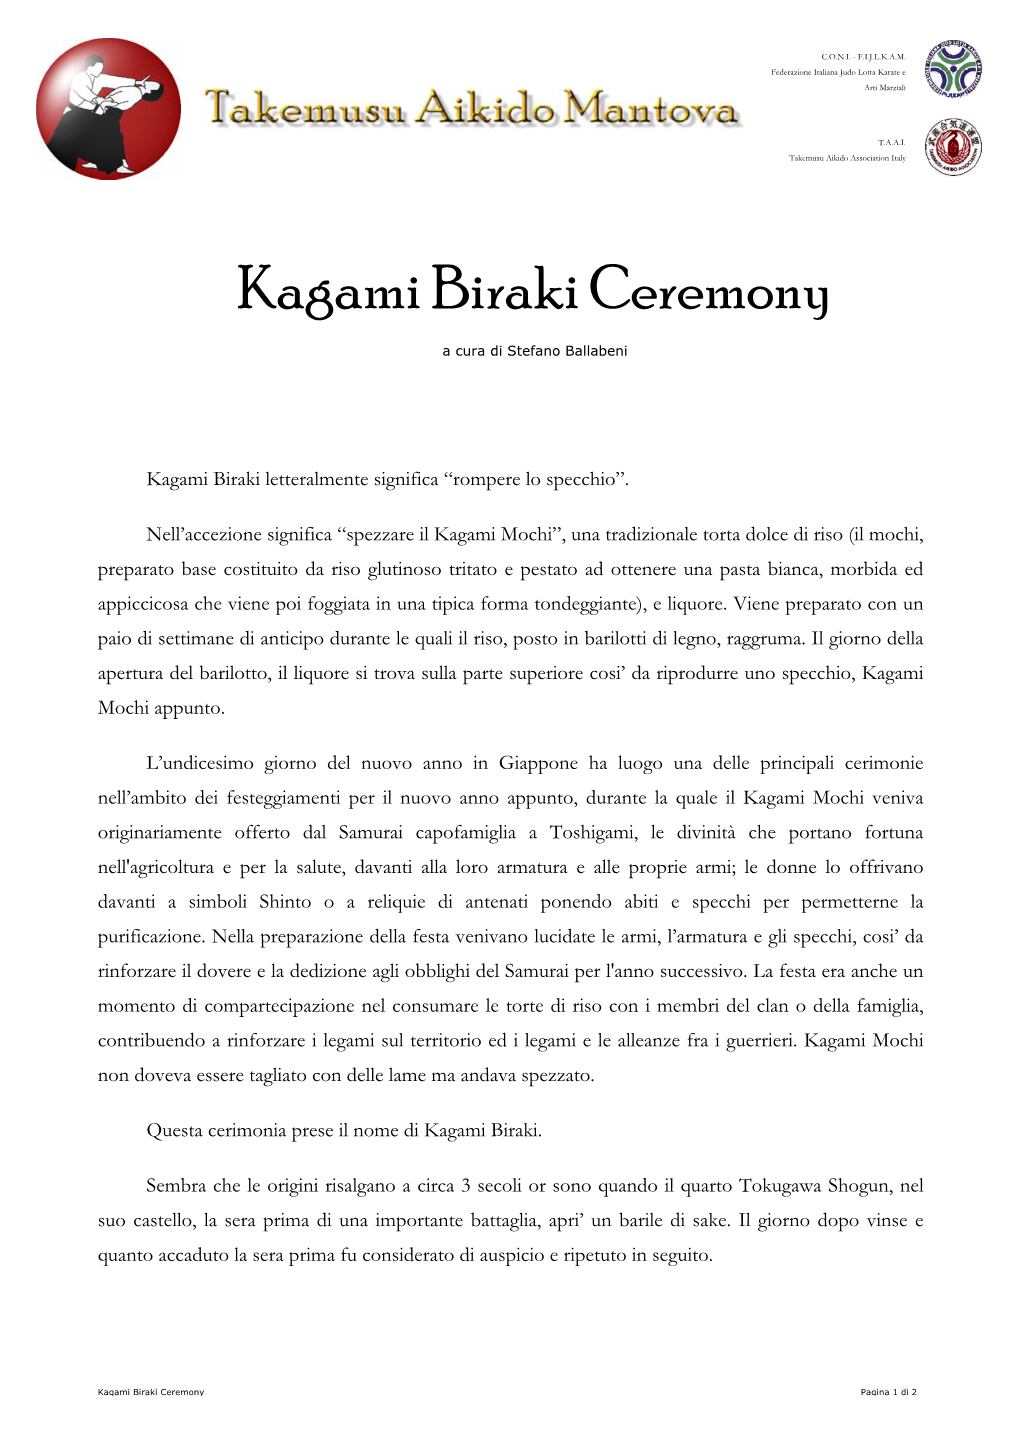 Kagami Biraki Ceremony